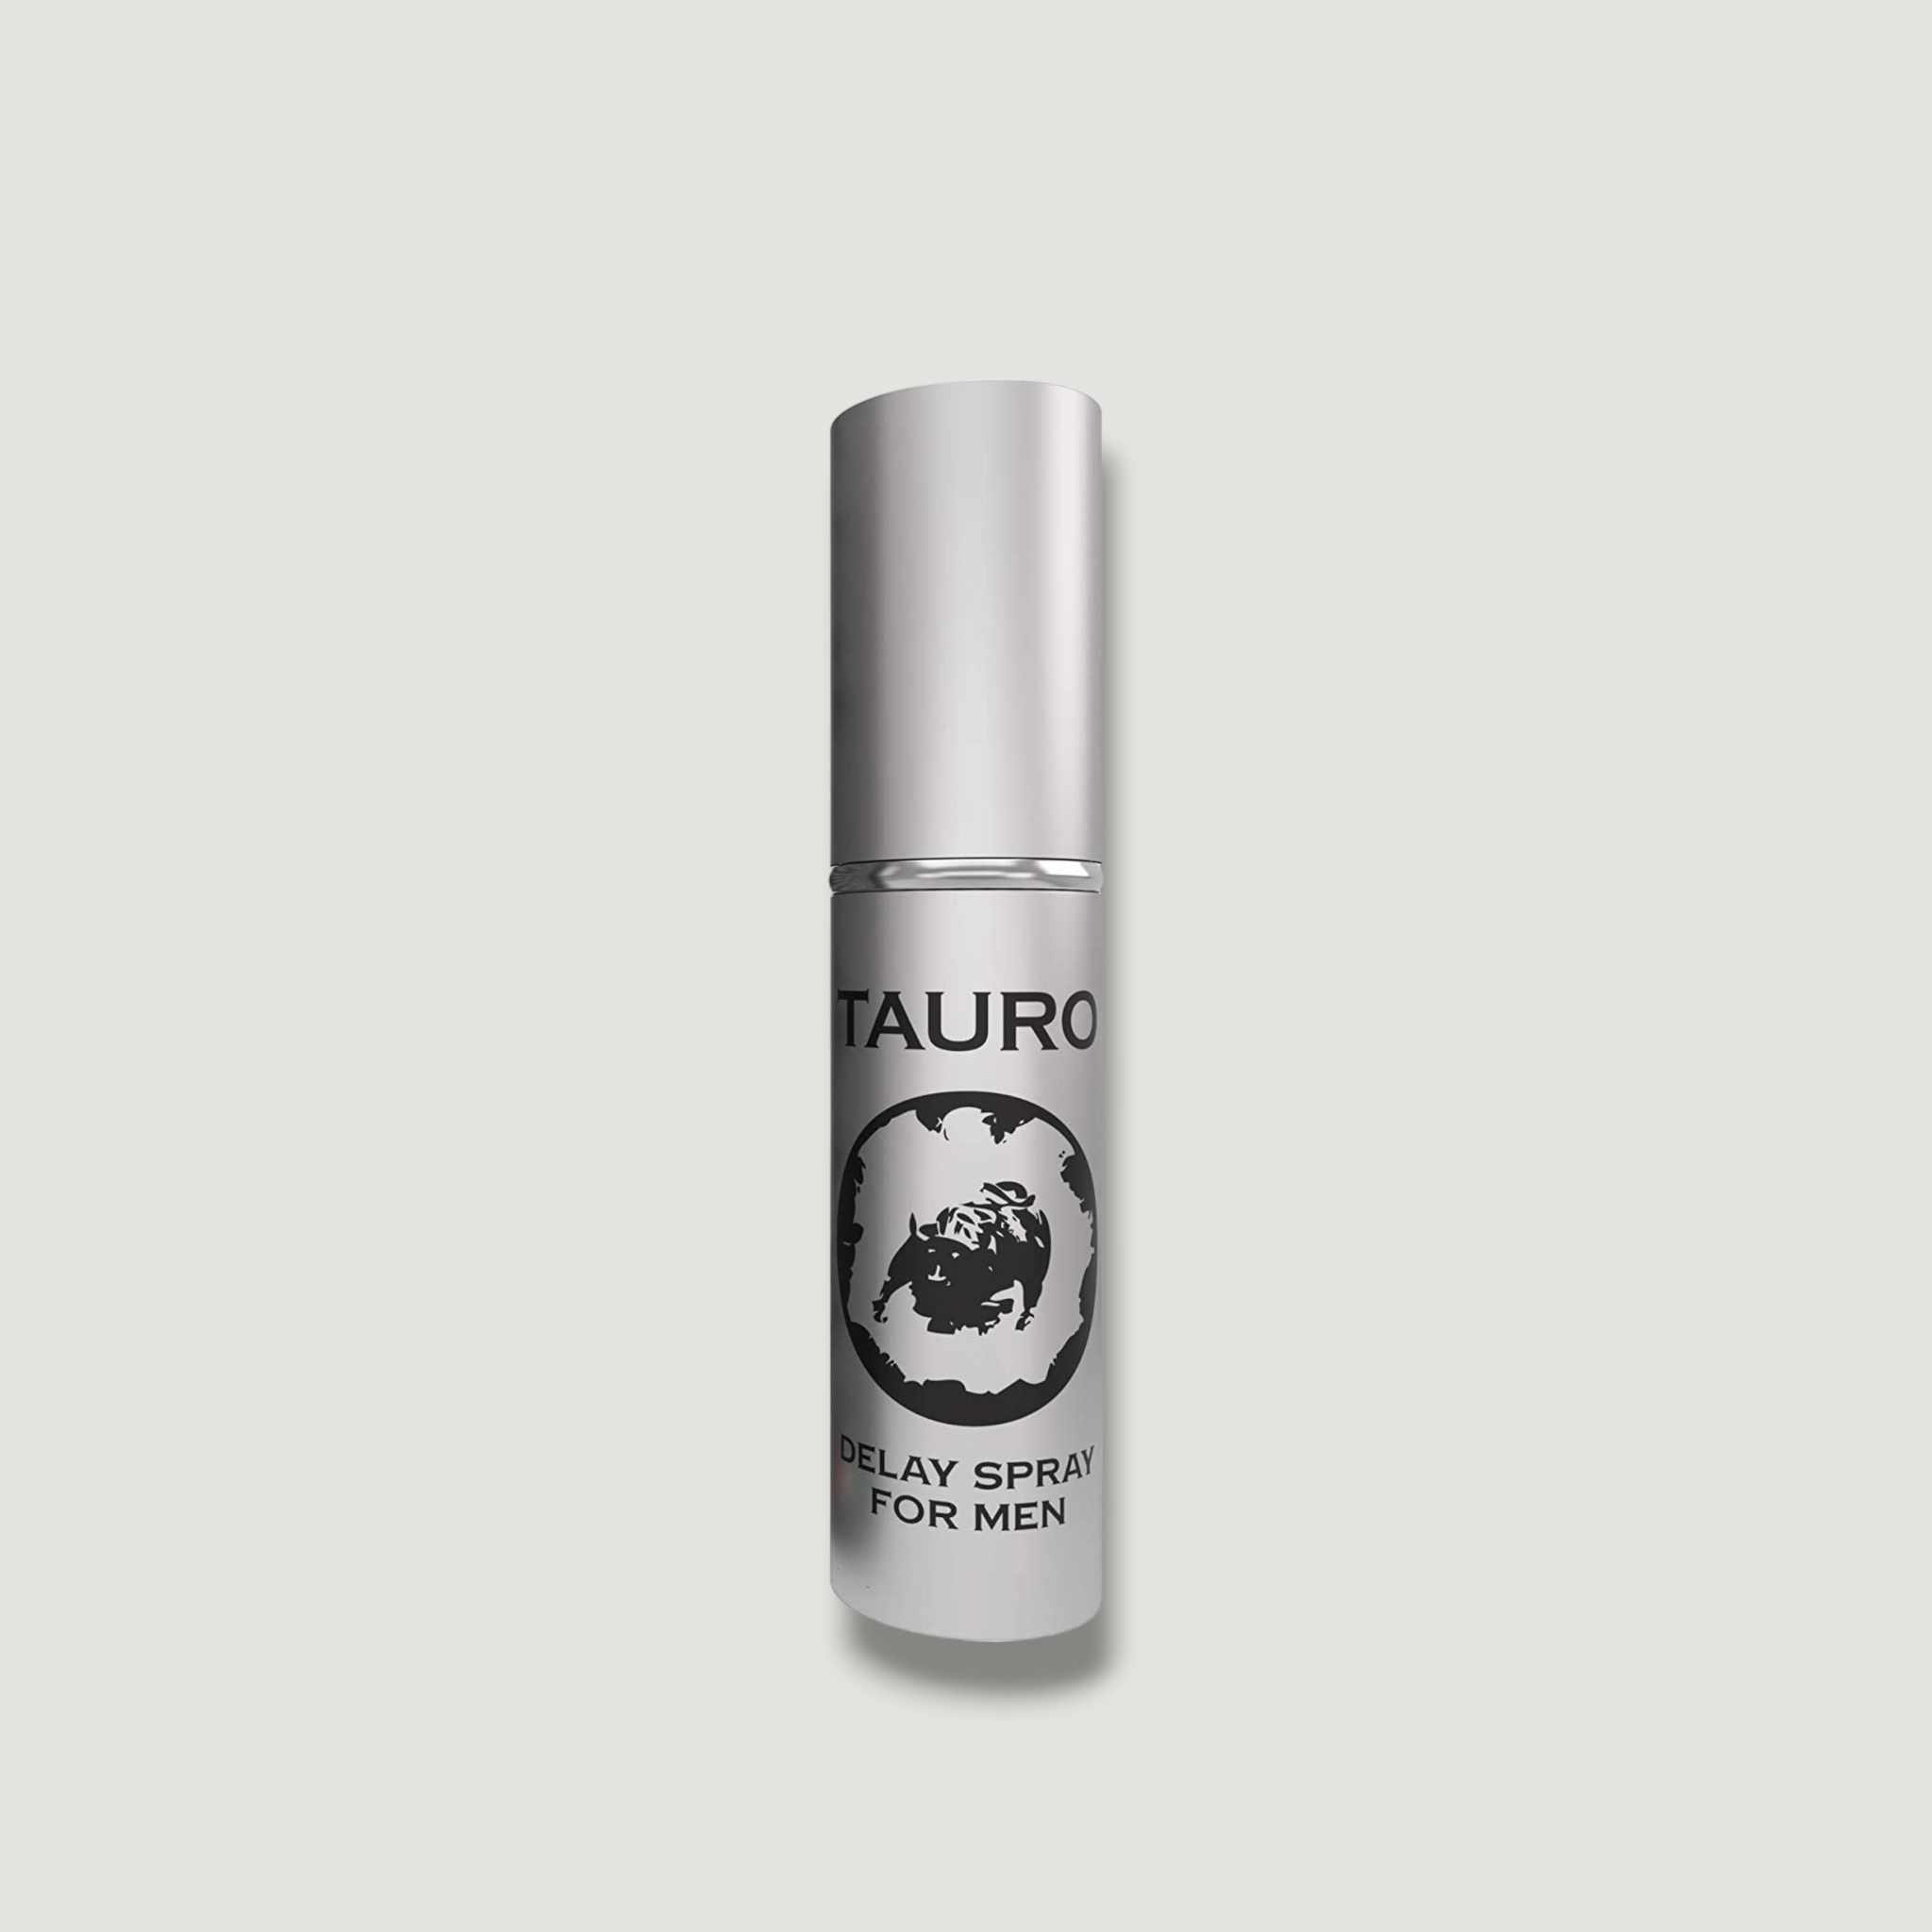 Taurus spray 5ml